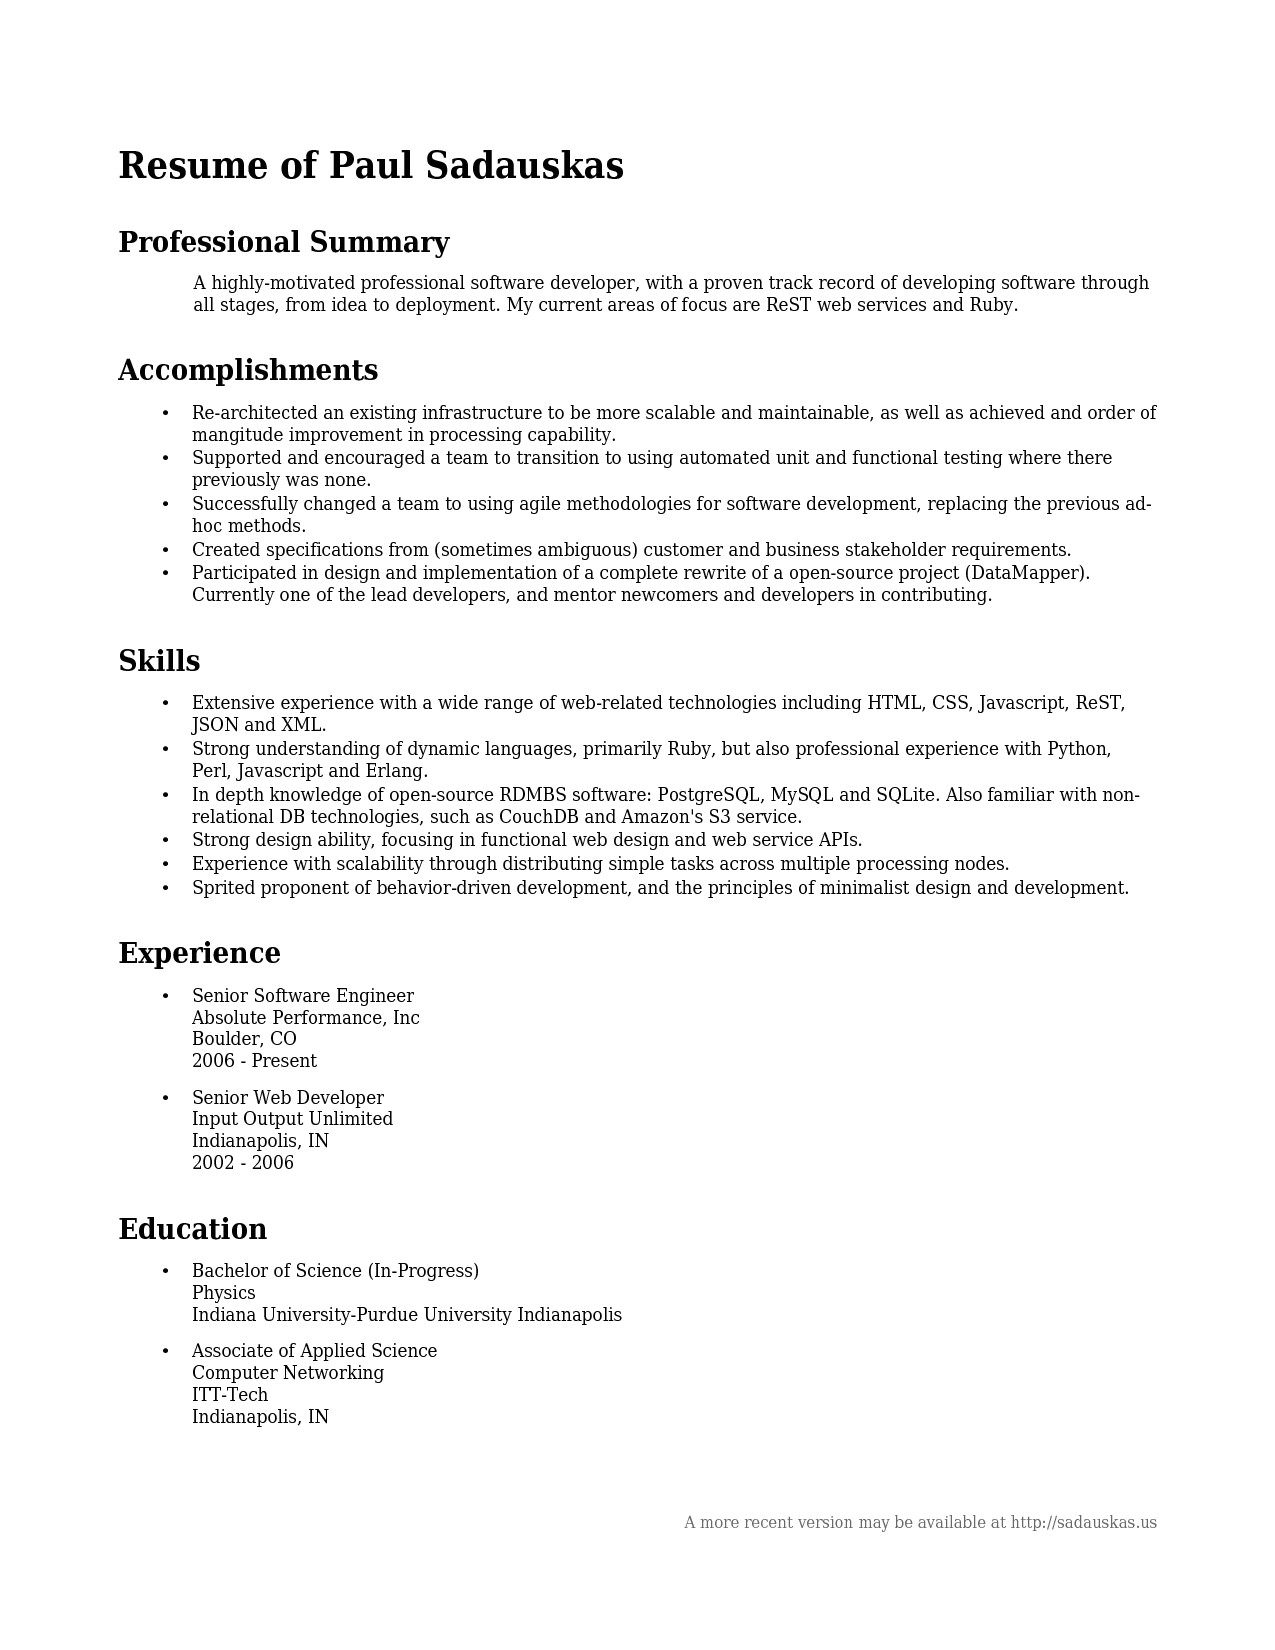 professional resume summary 2016